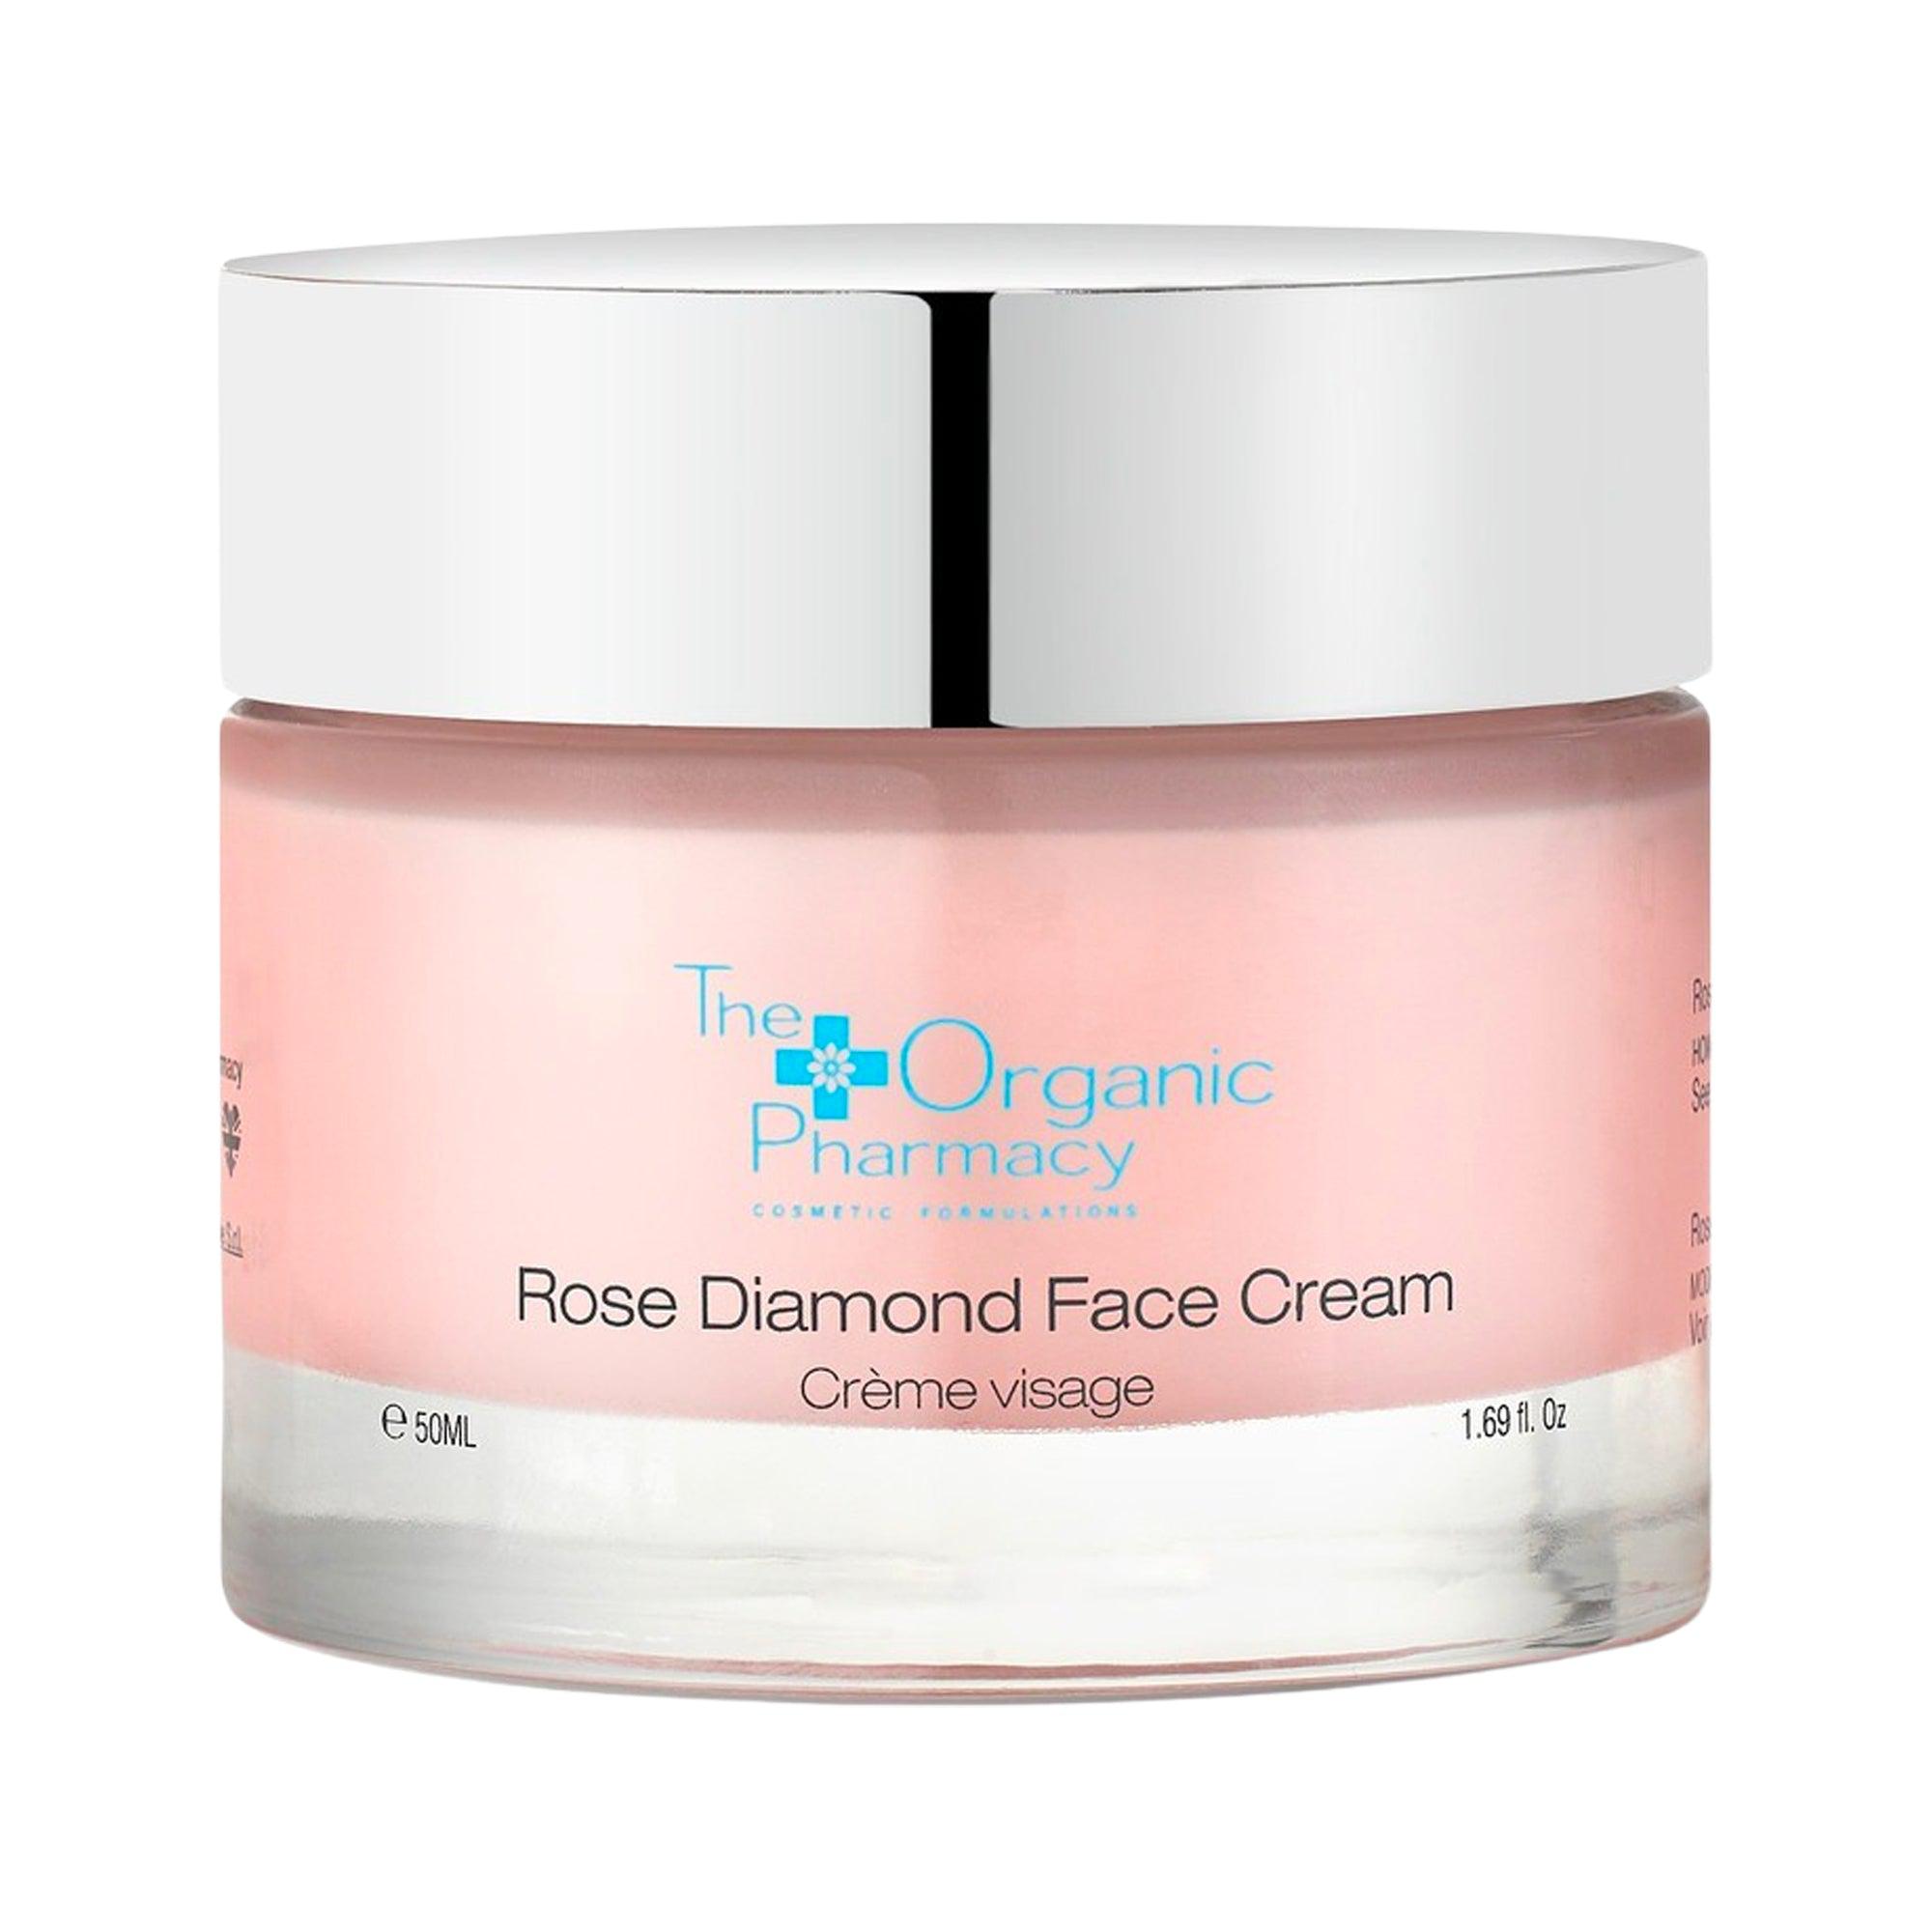 Crème visage – Rose diamond face cream Crème visage – Rose diamond face cream - The Organic Pharmacy